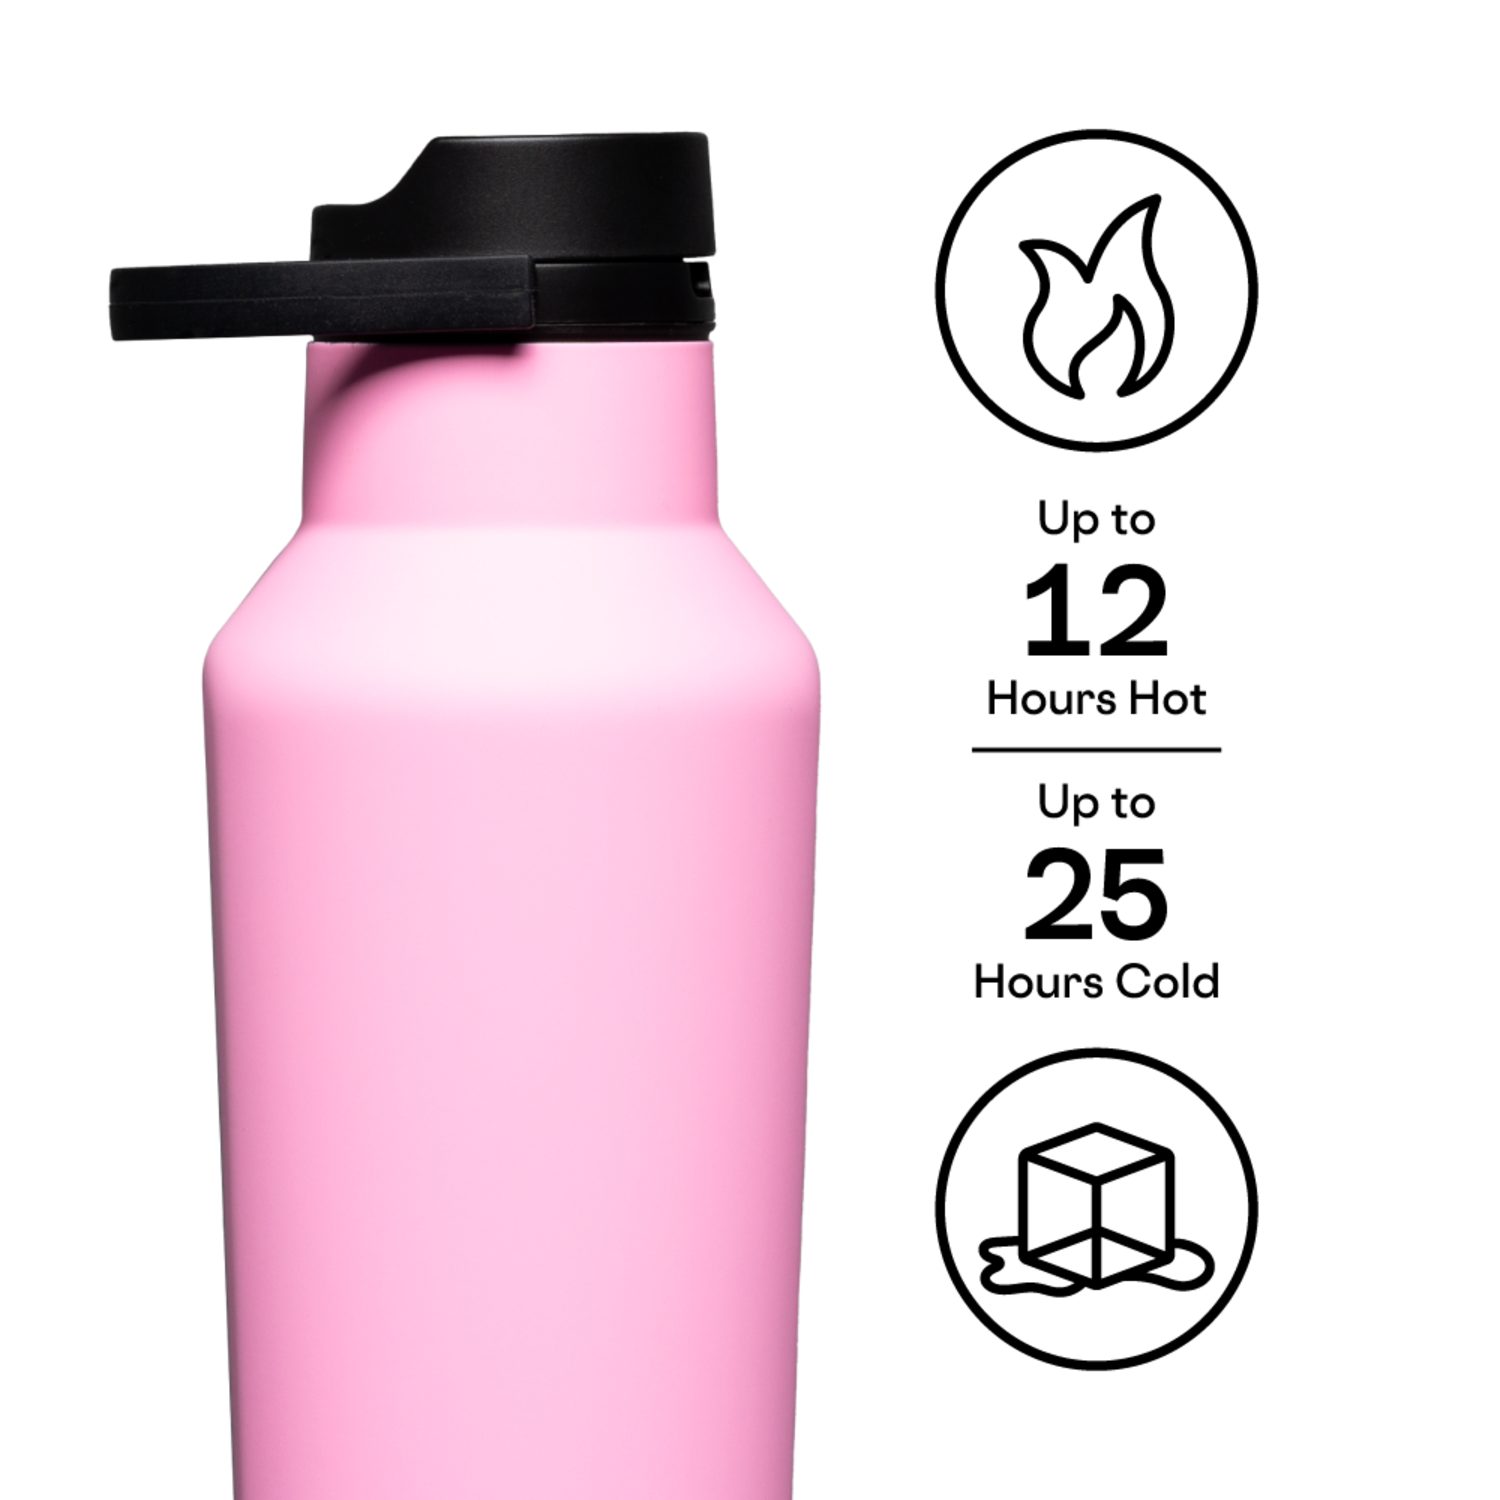 DRINCO® 22oz Stainless Steel Sport Water Bottle - Flamingo Pink